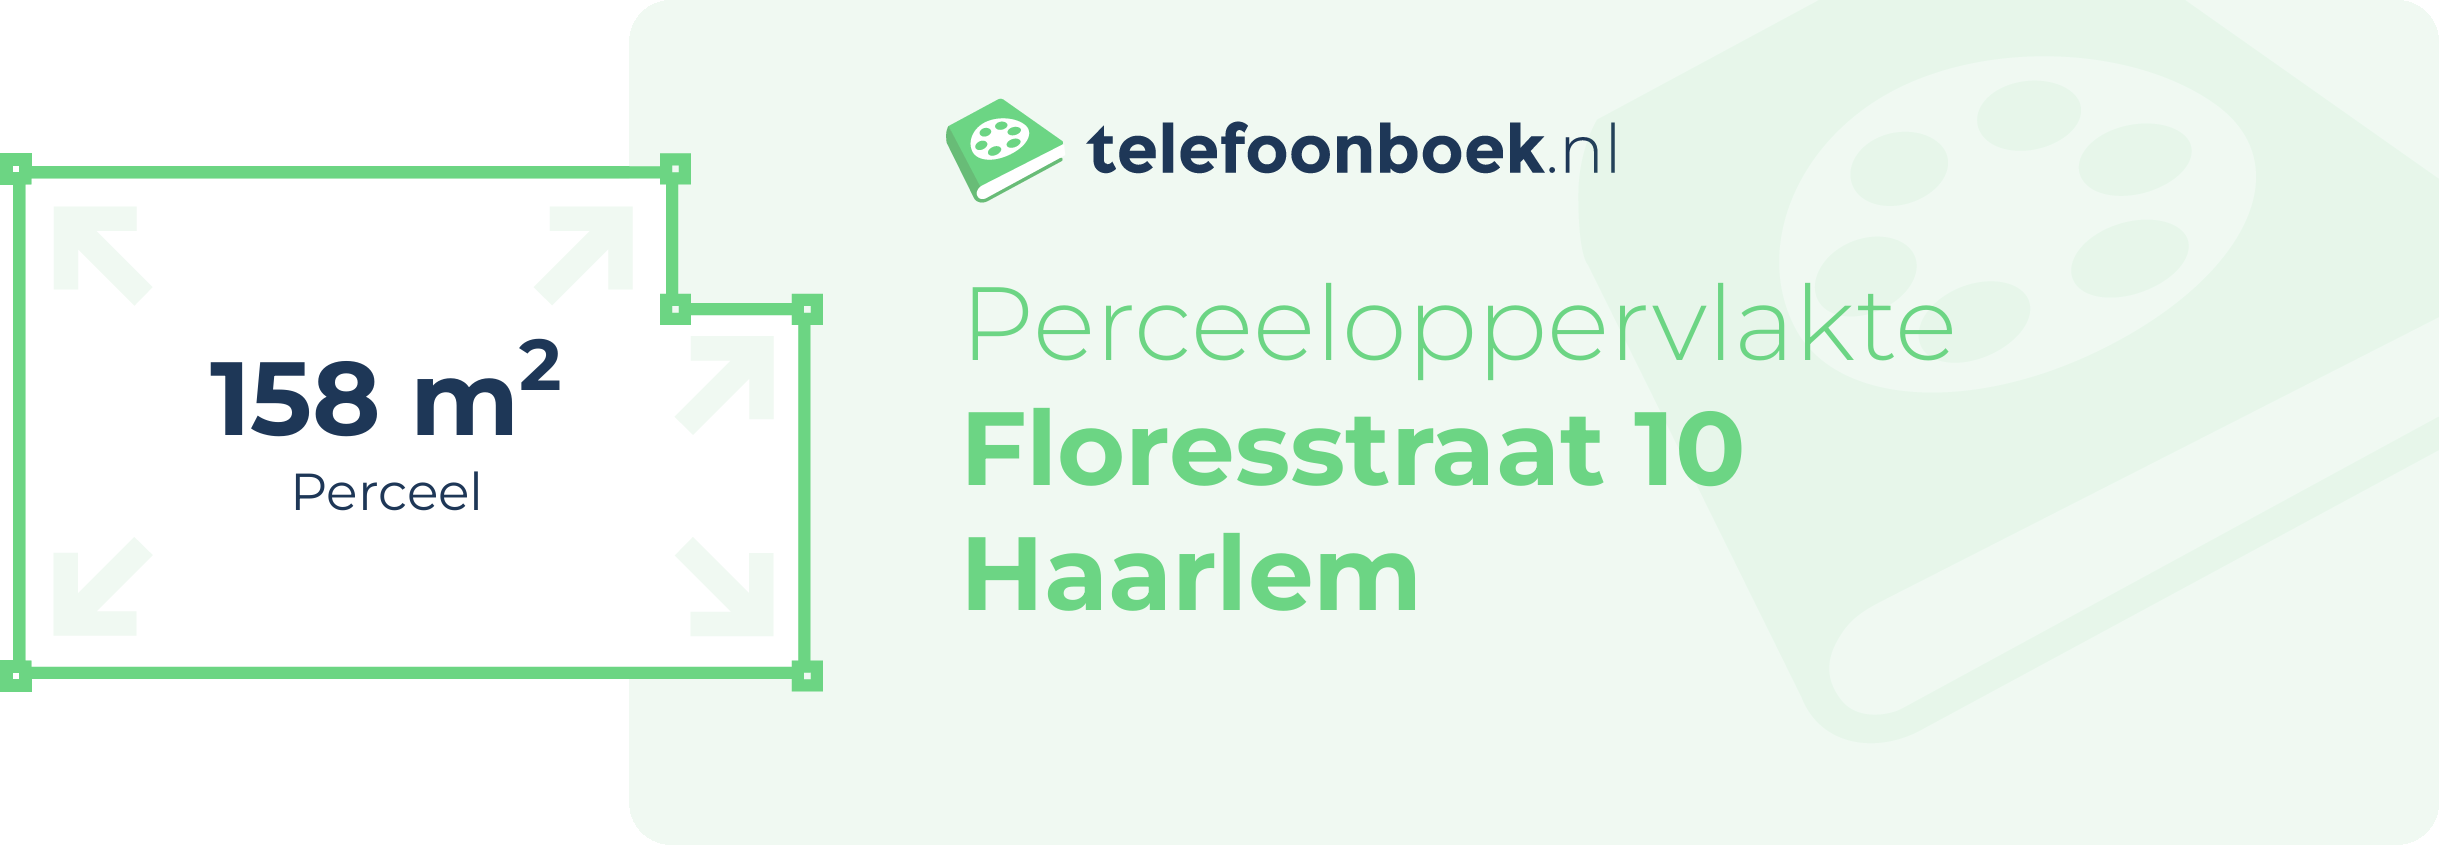 Perceeloppervlakte Floresstraat 10 Haarlem